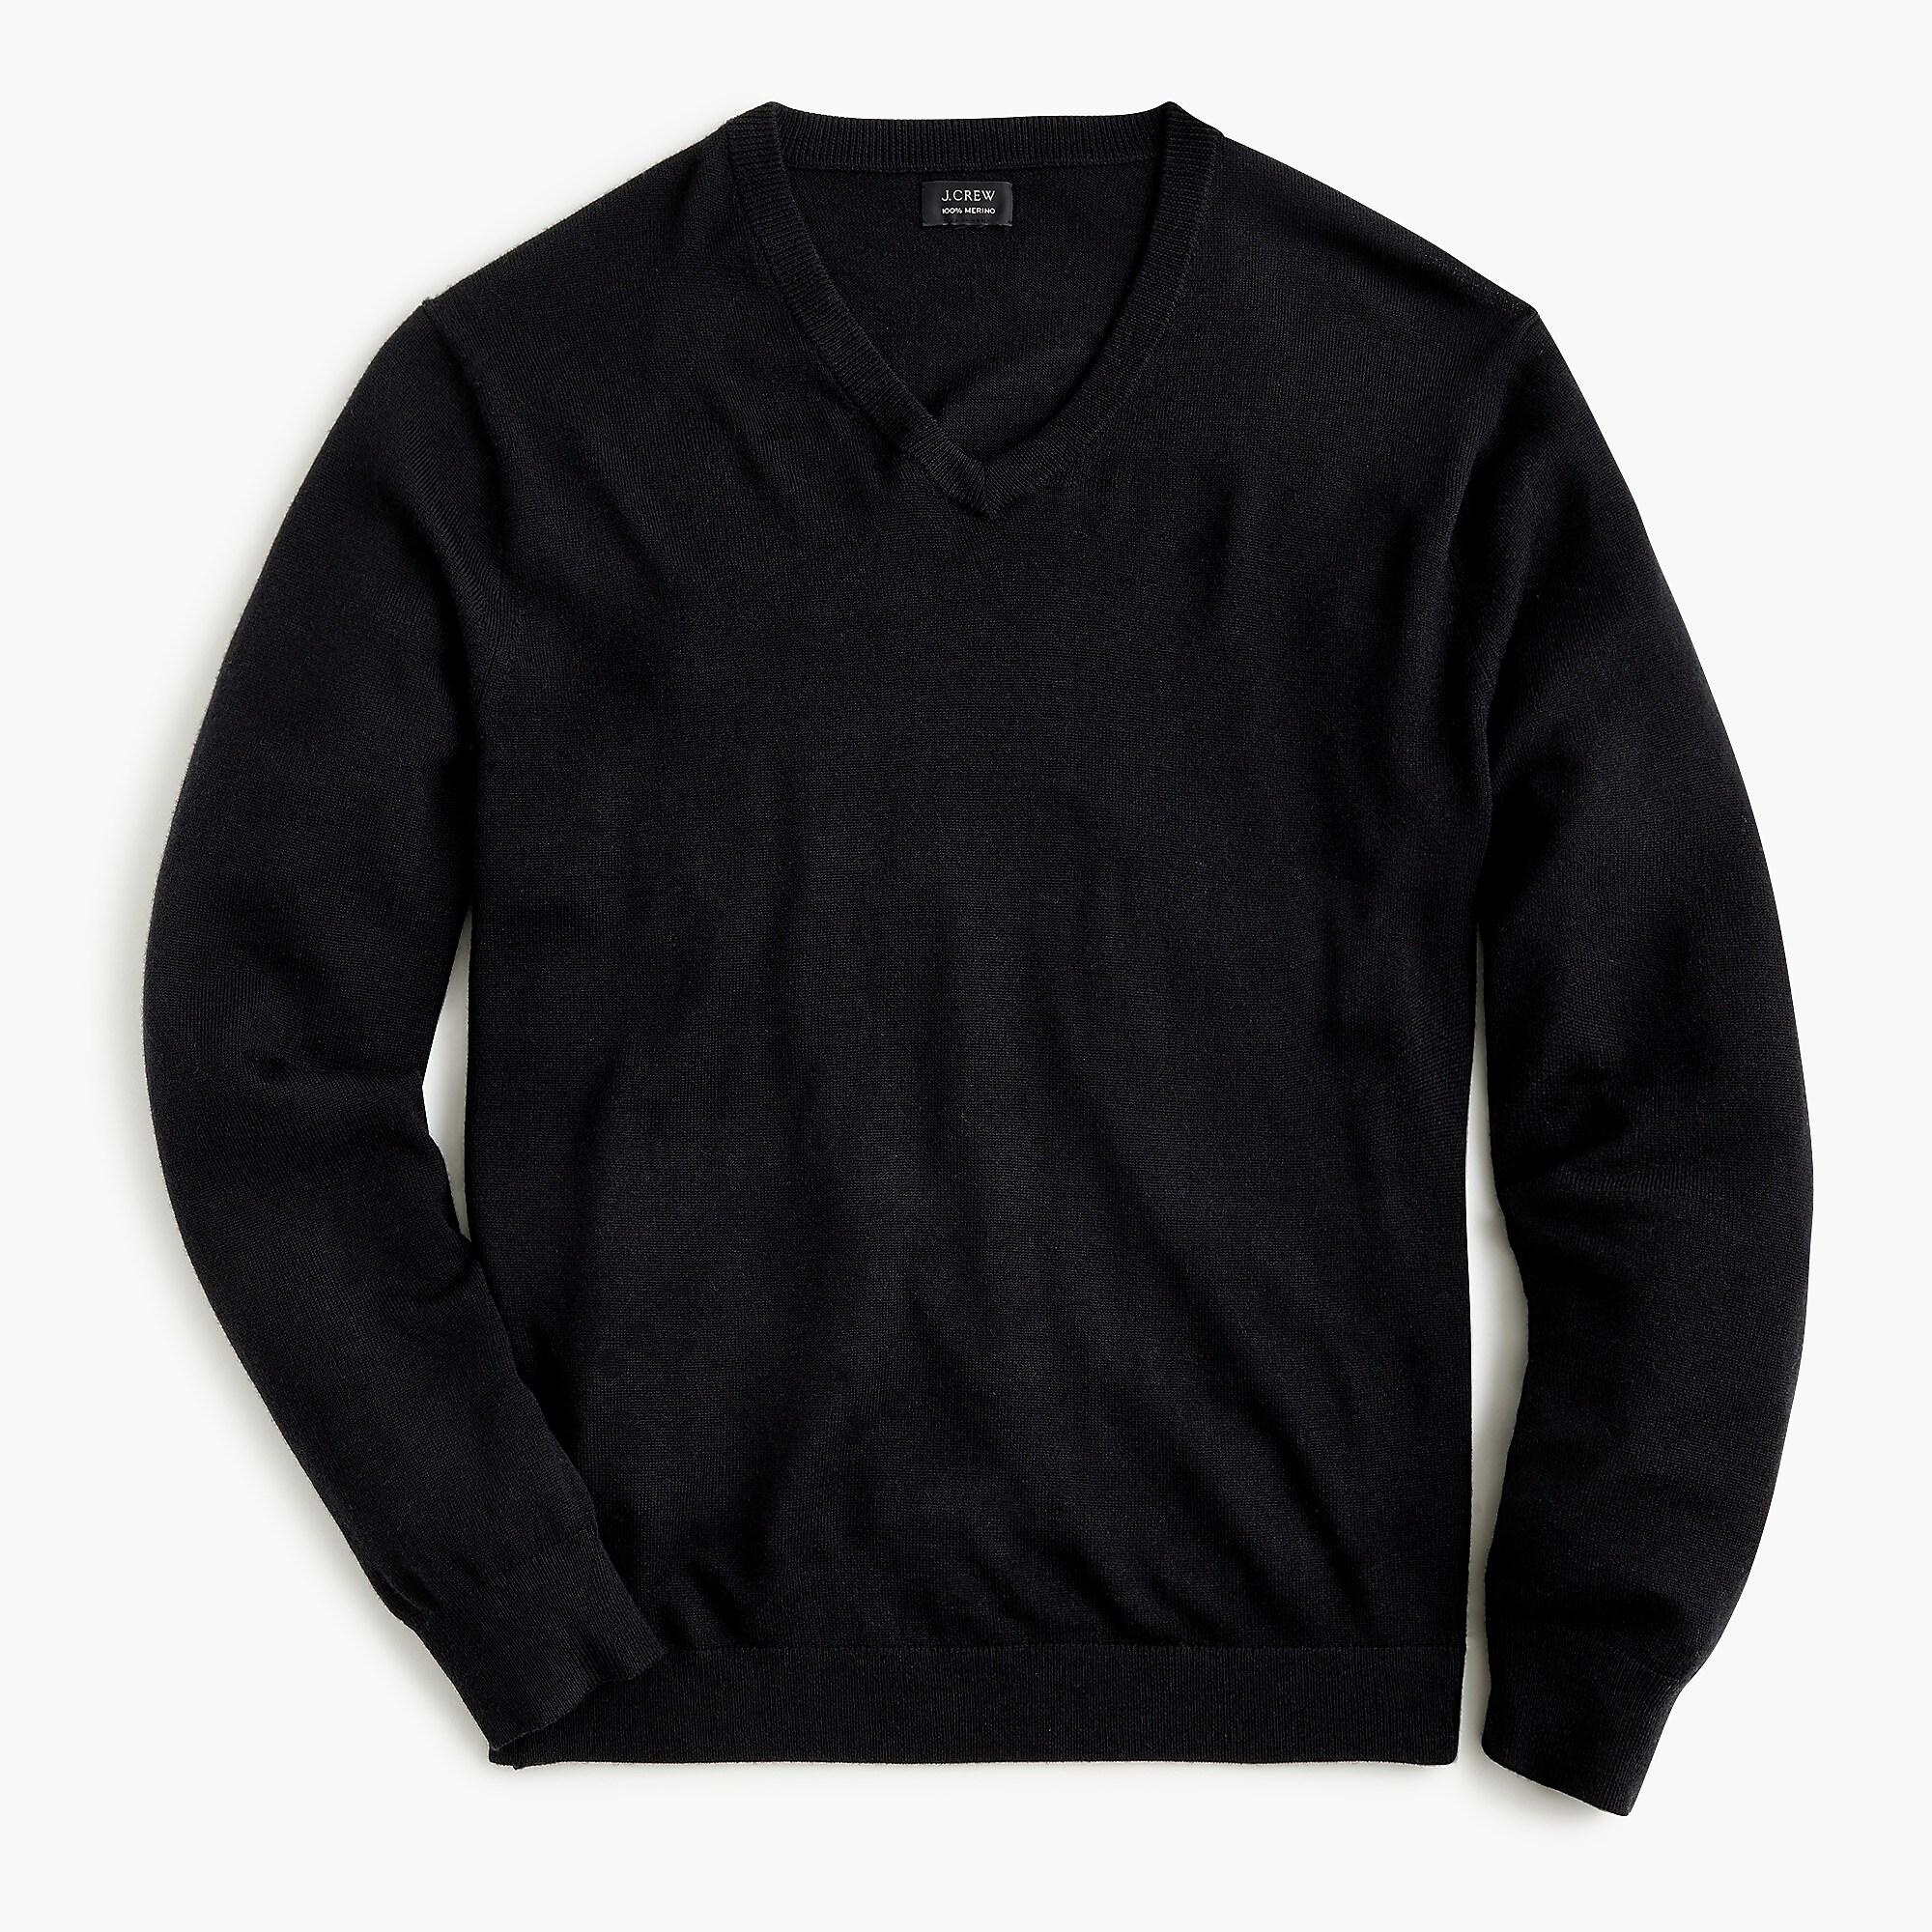 J.Crew Washable Merino Wool V-neck Sweater in Black for Men - Save 50% ...